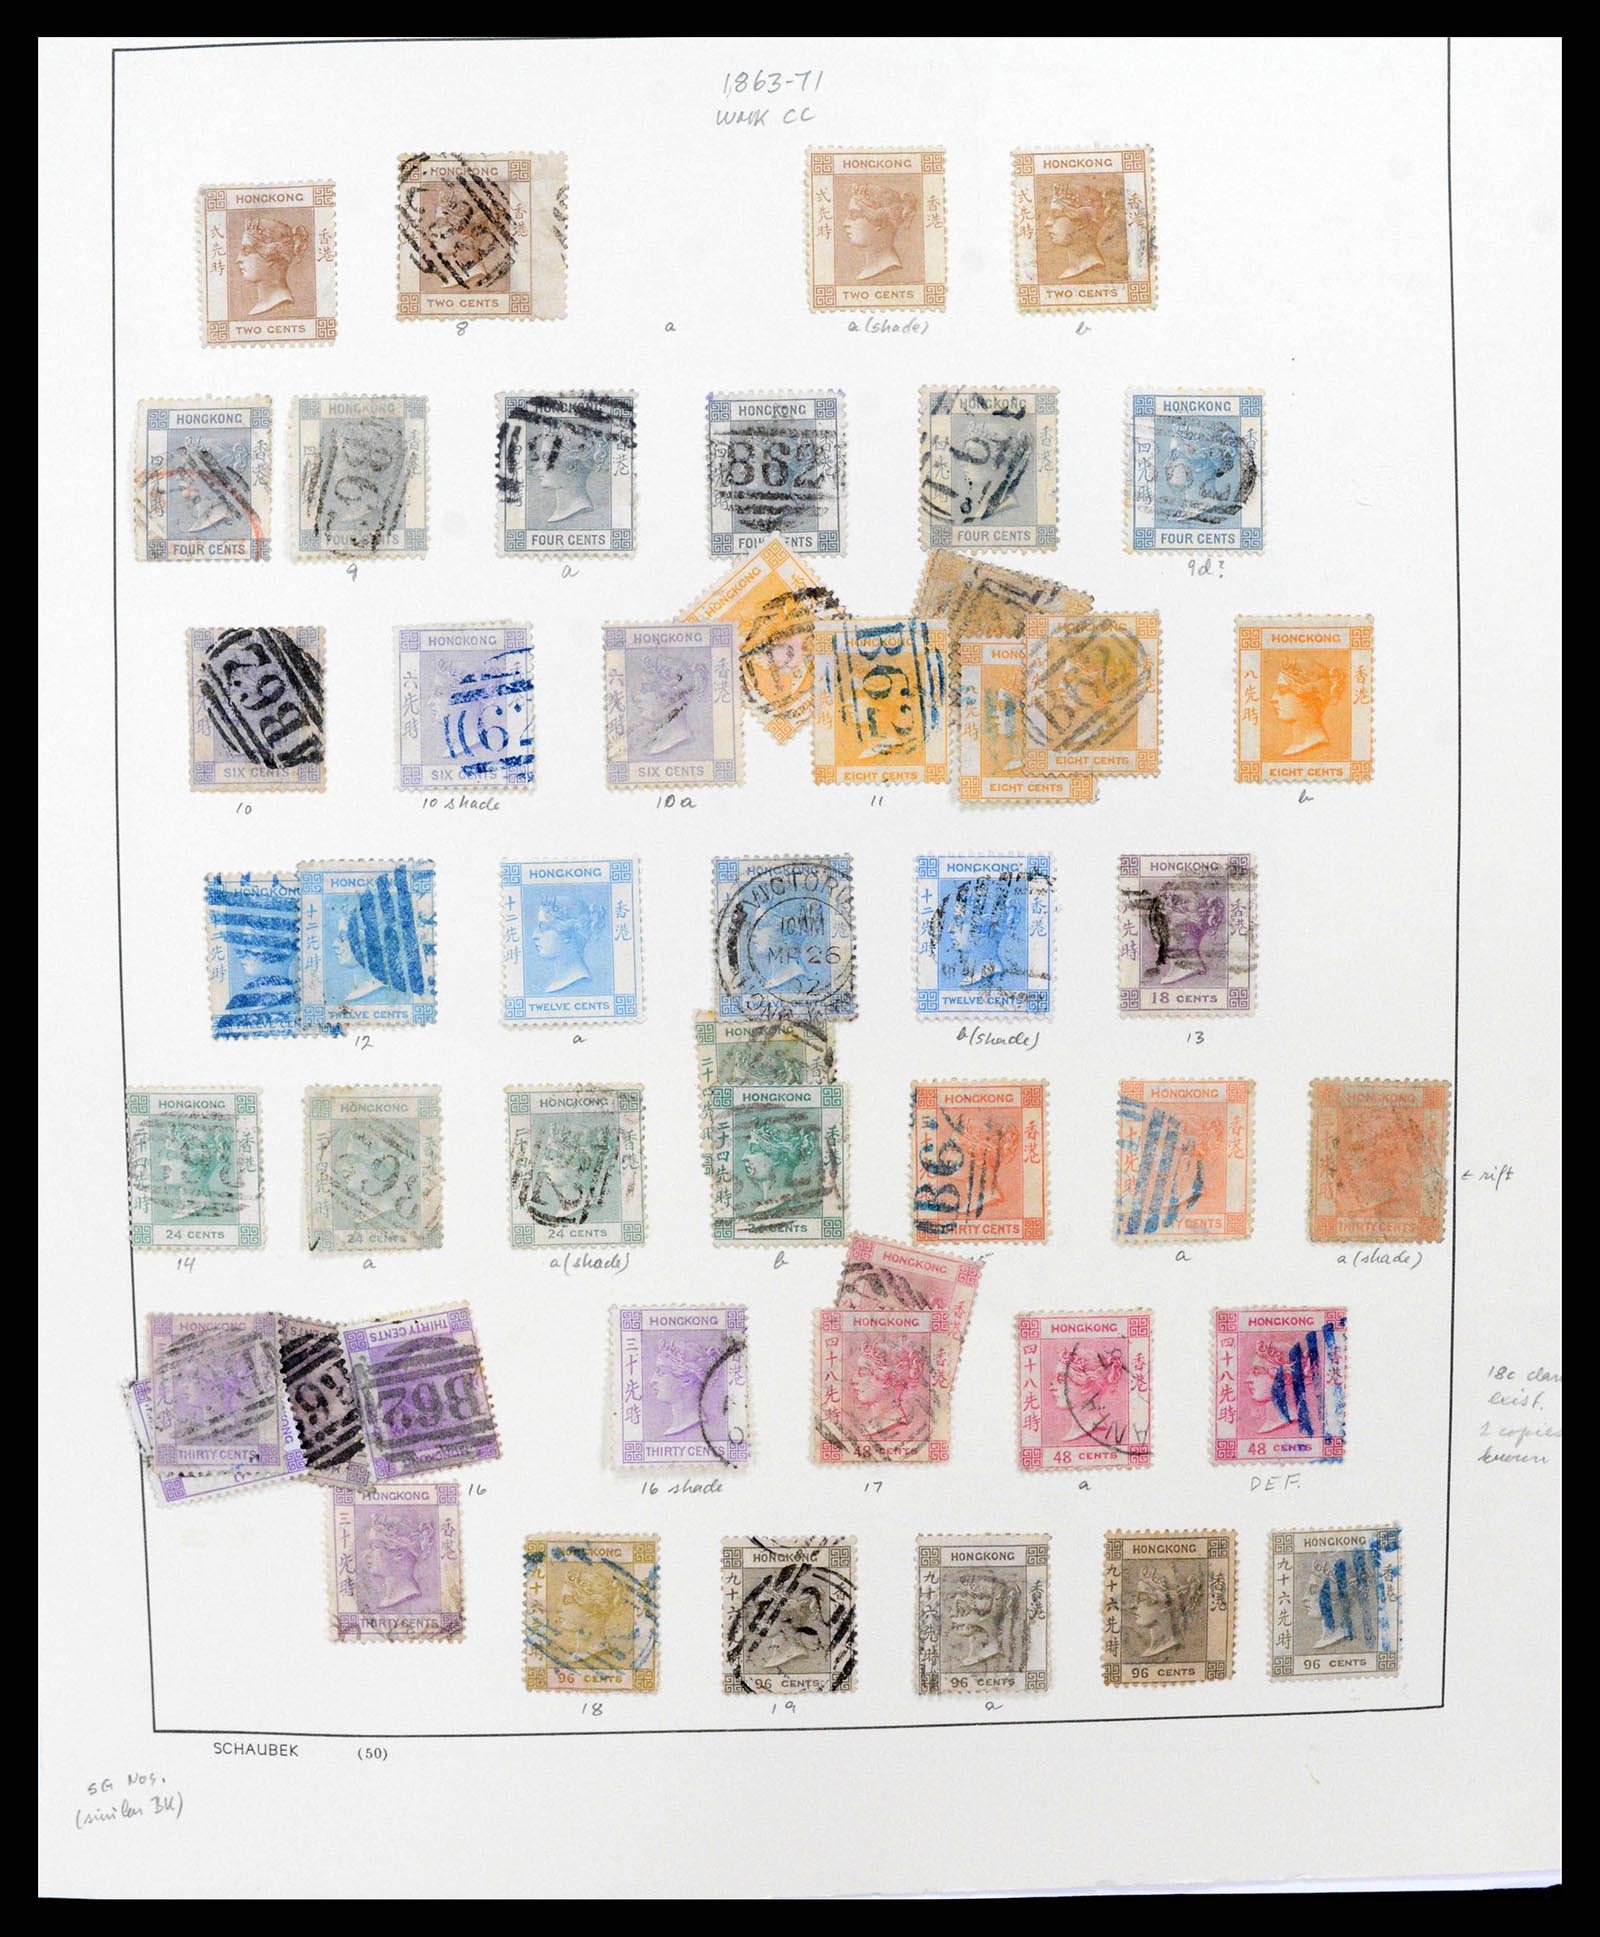 37955 0002 - Stamp collection 37955 Hong Kong supercollection 1862-2007.